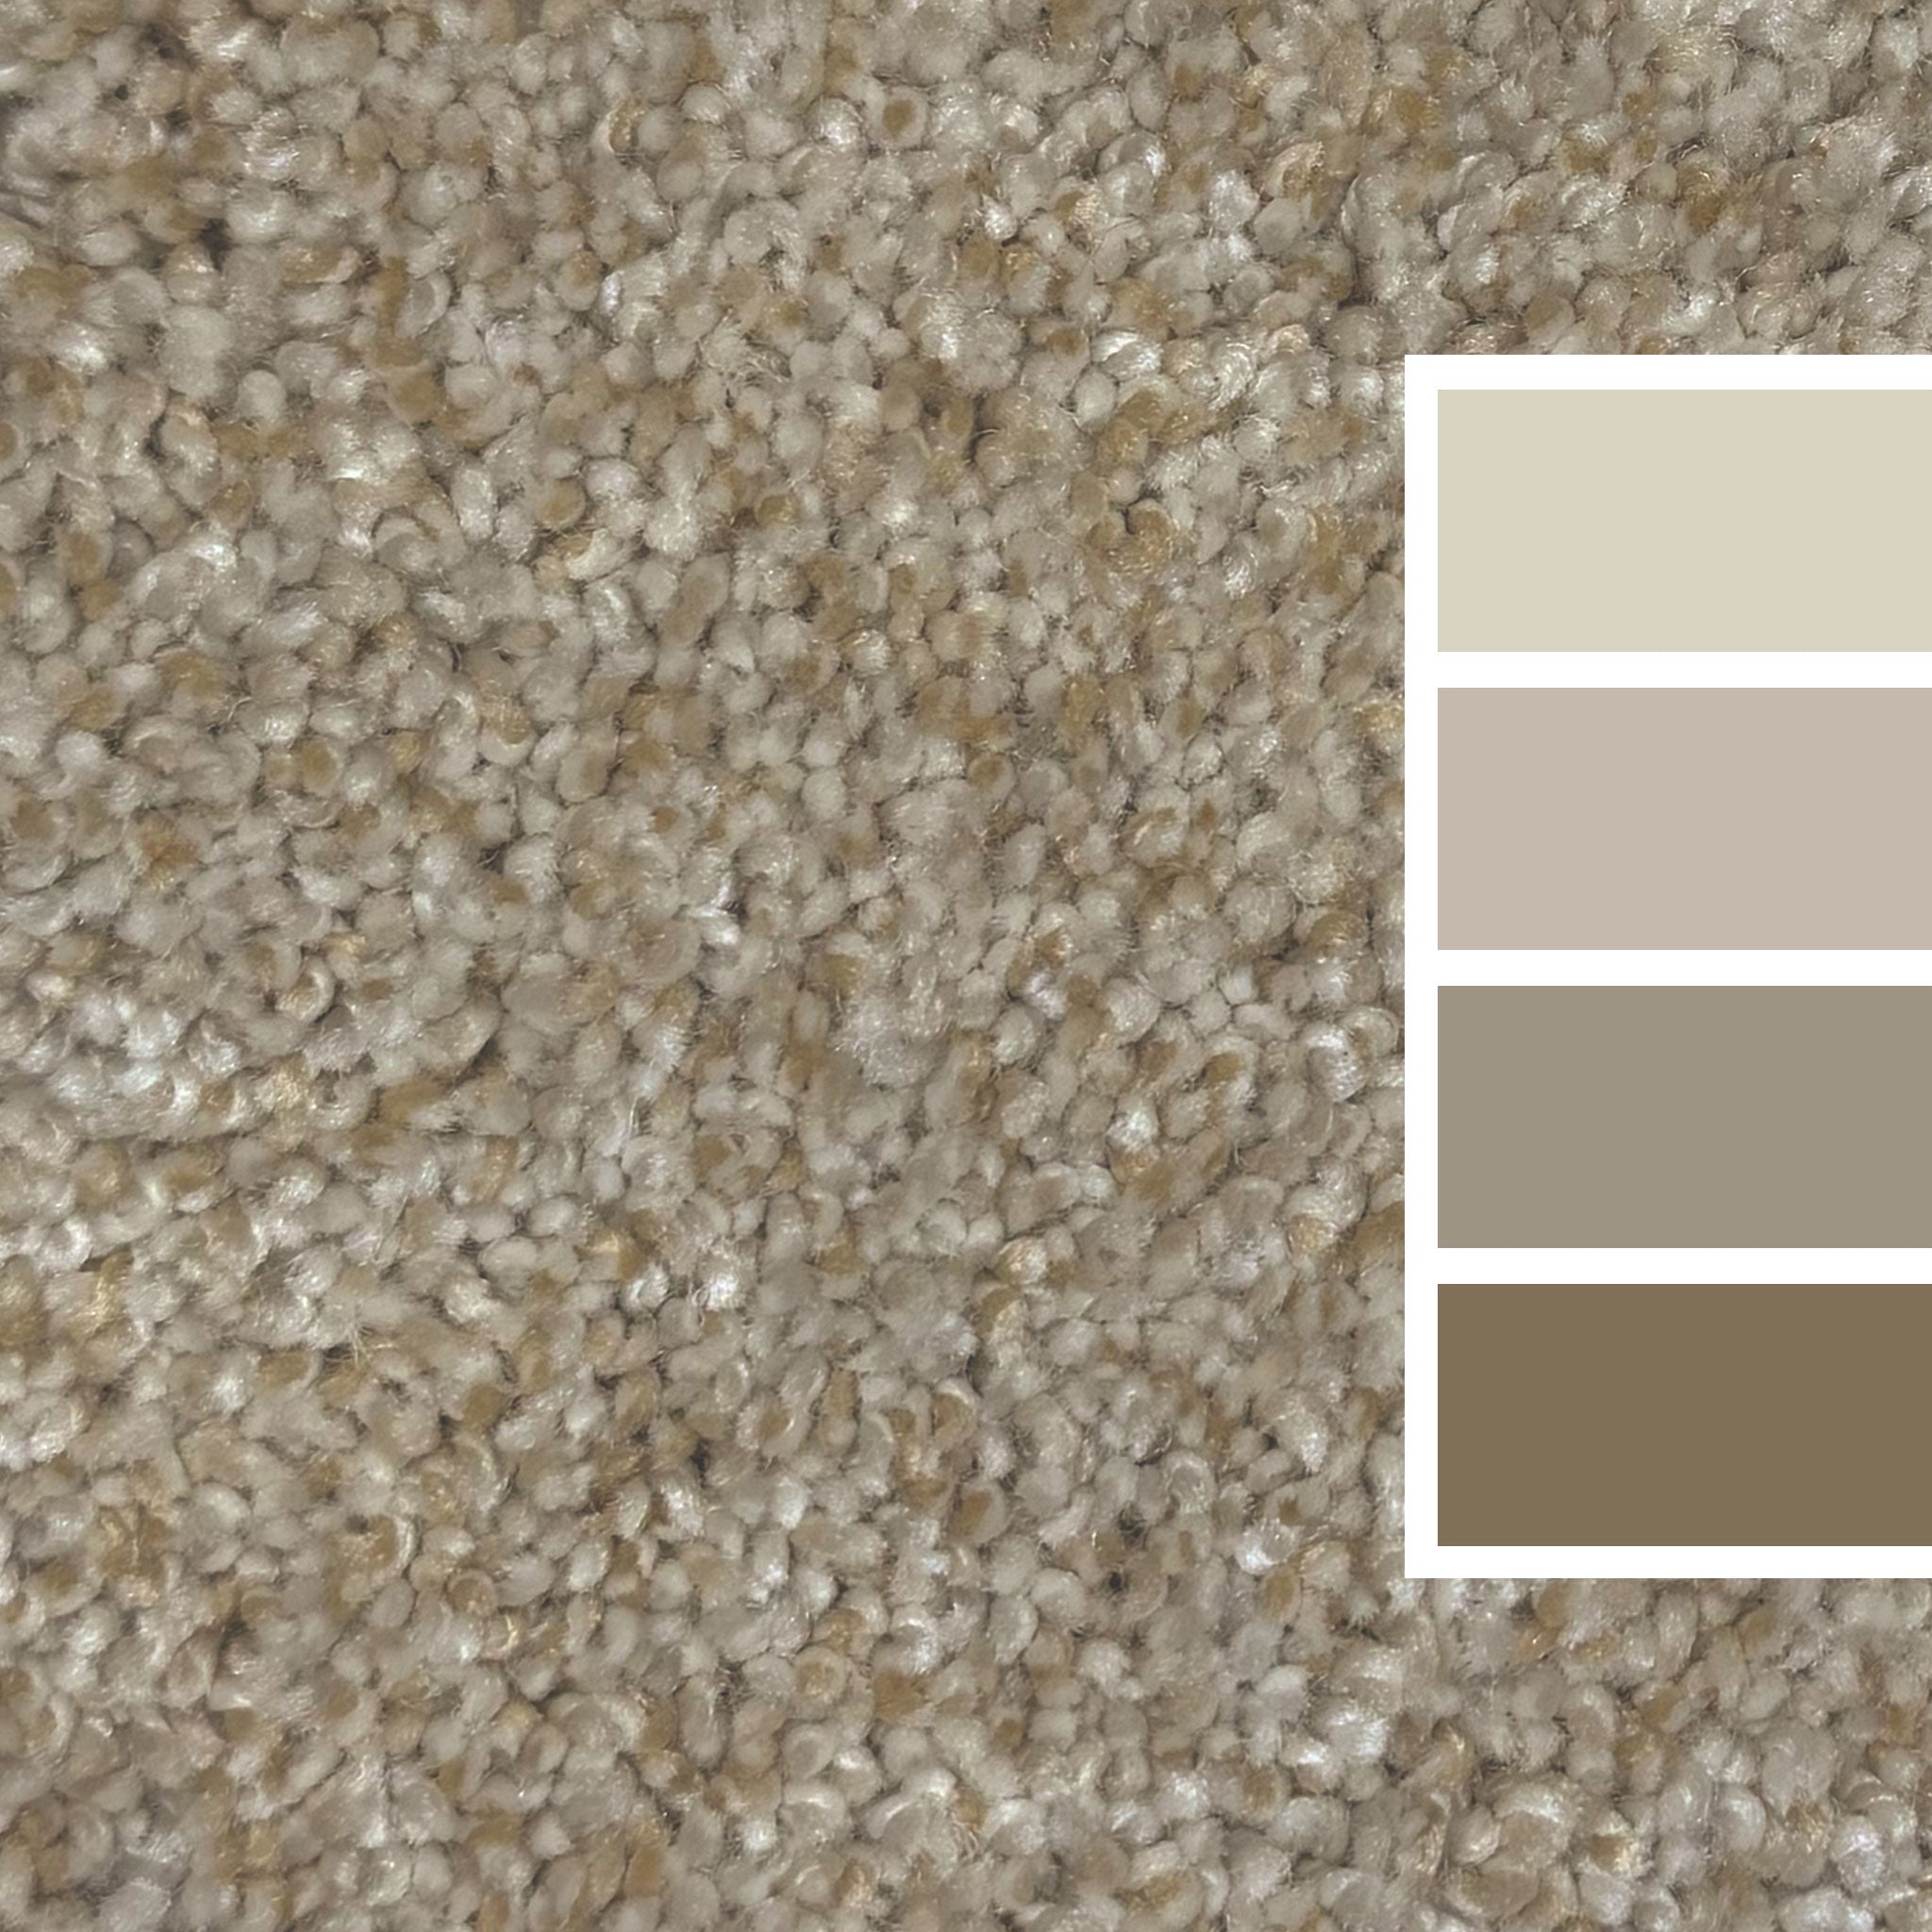 Stratosphere, Gold Standard III, Carpet by Dreamweaver, Calhoun's Flooring Springfield, IL Color Swatch